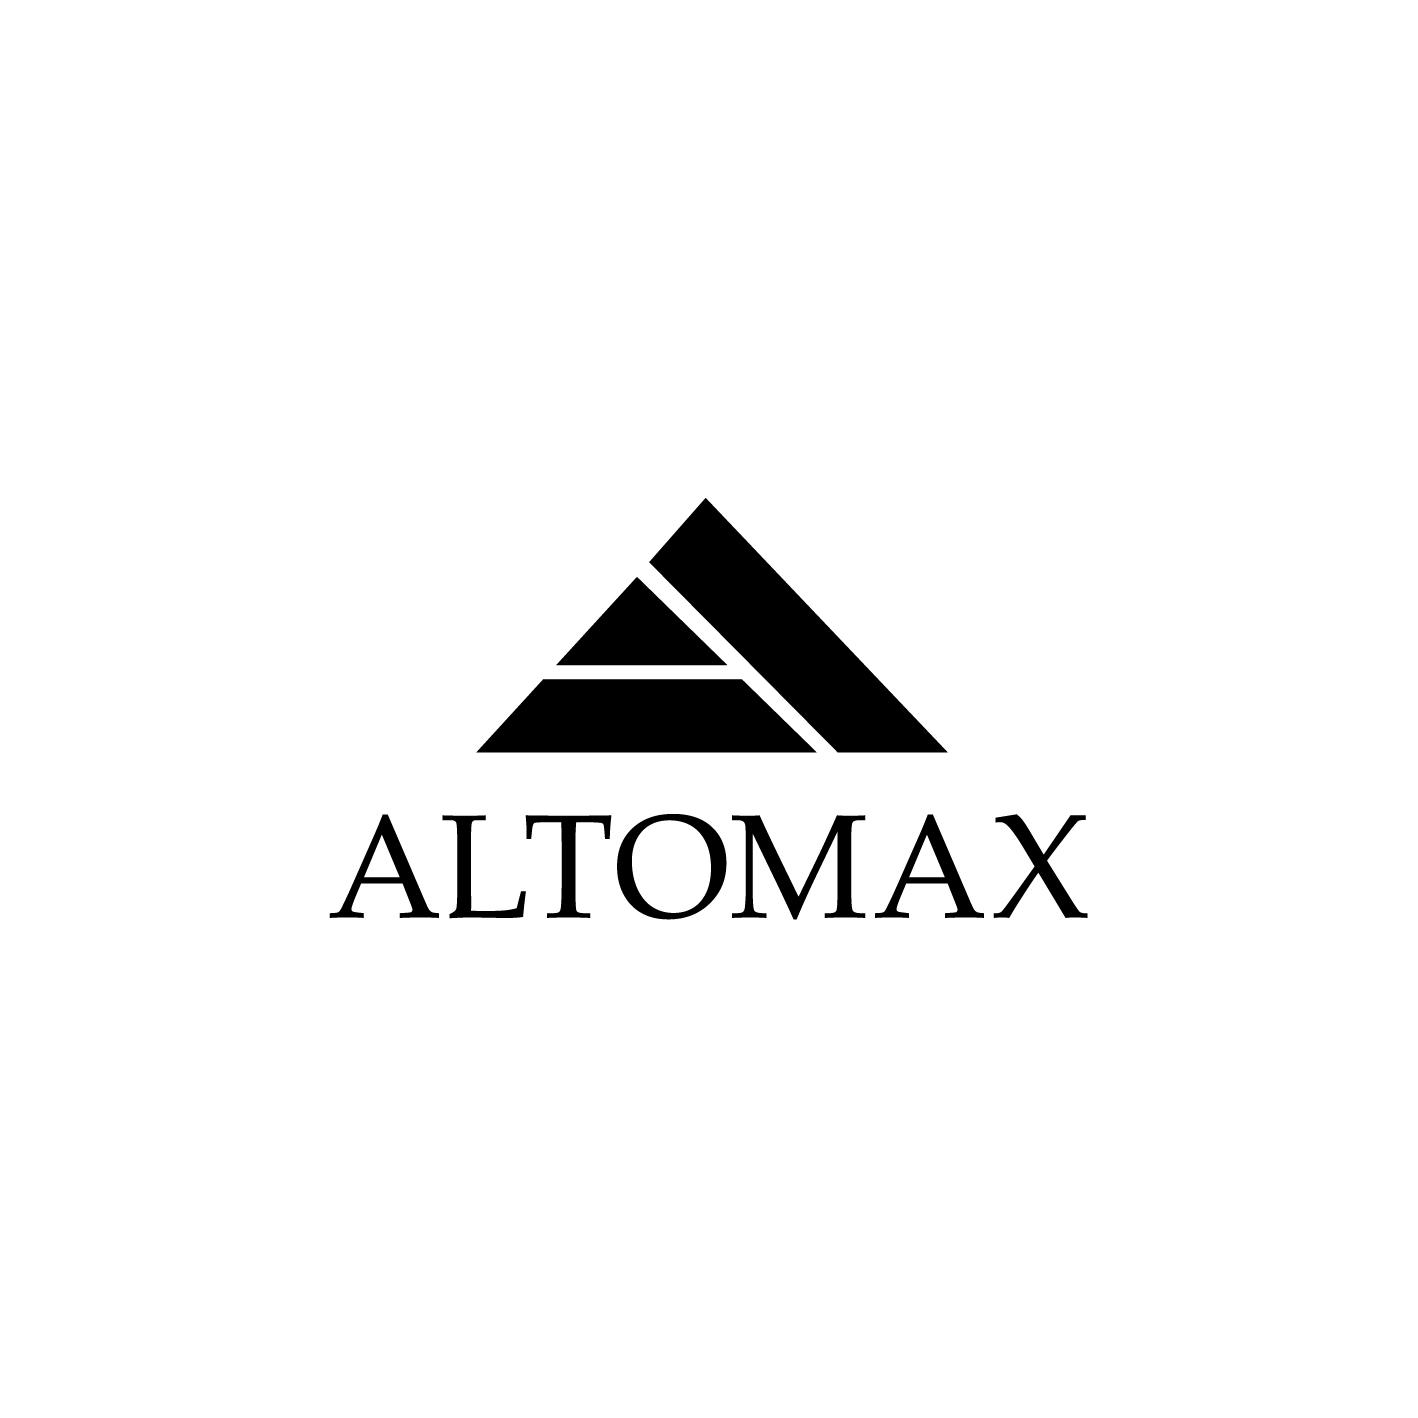 Altomax : Brand Short Description Type Here.